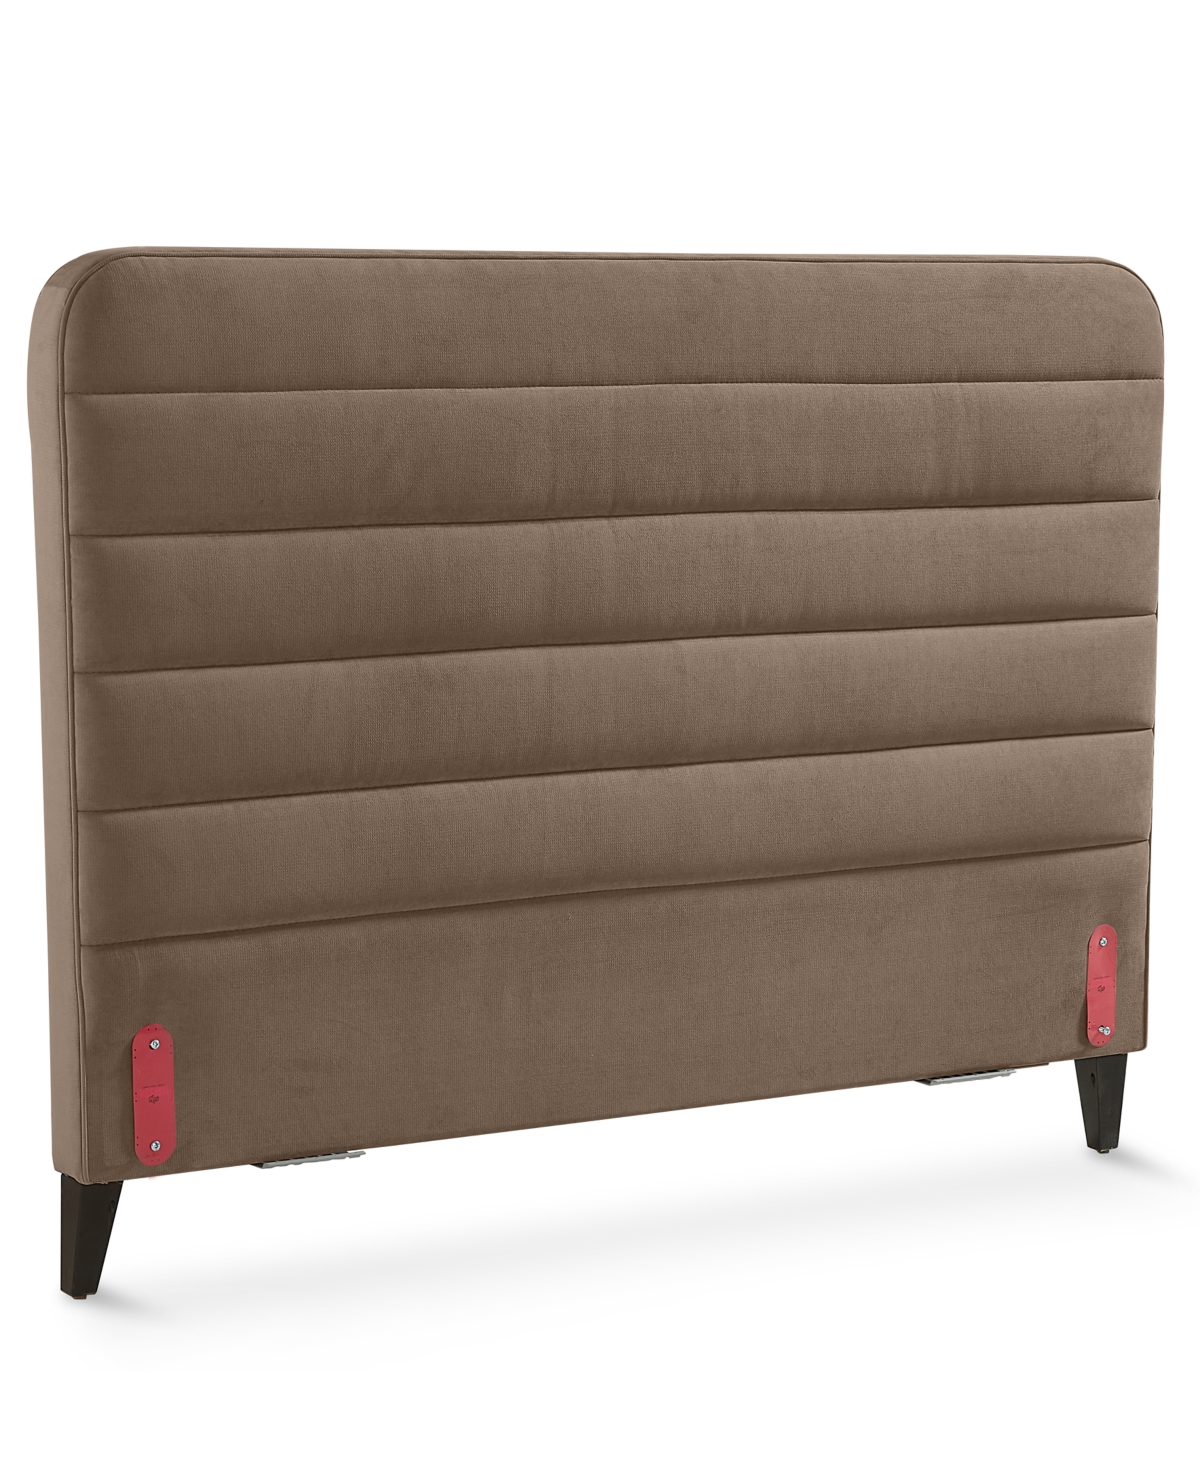 Furniture Haryan Upholstered Full Headboard In Taupe